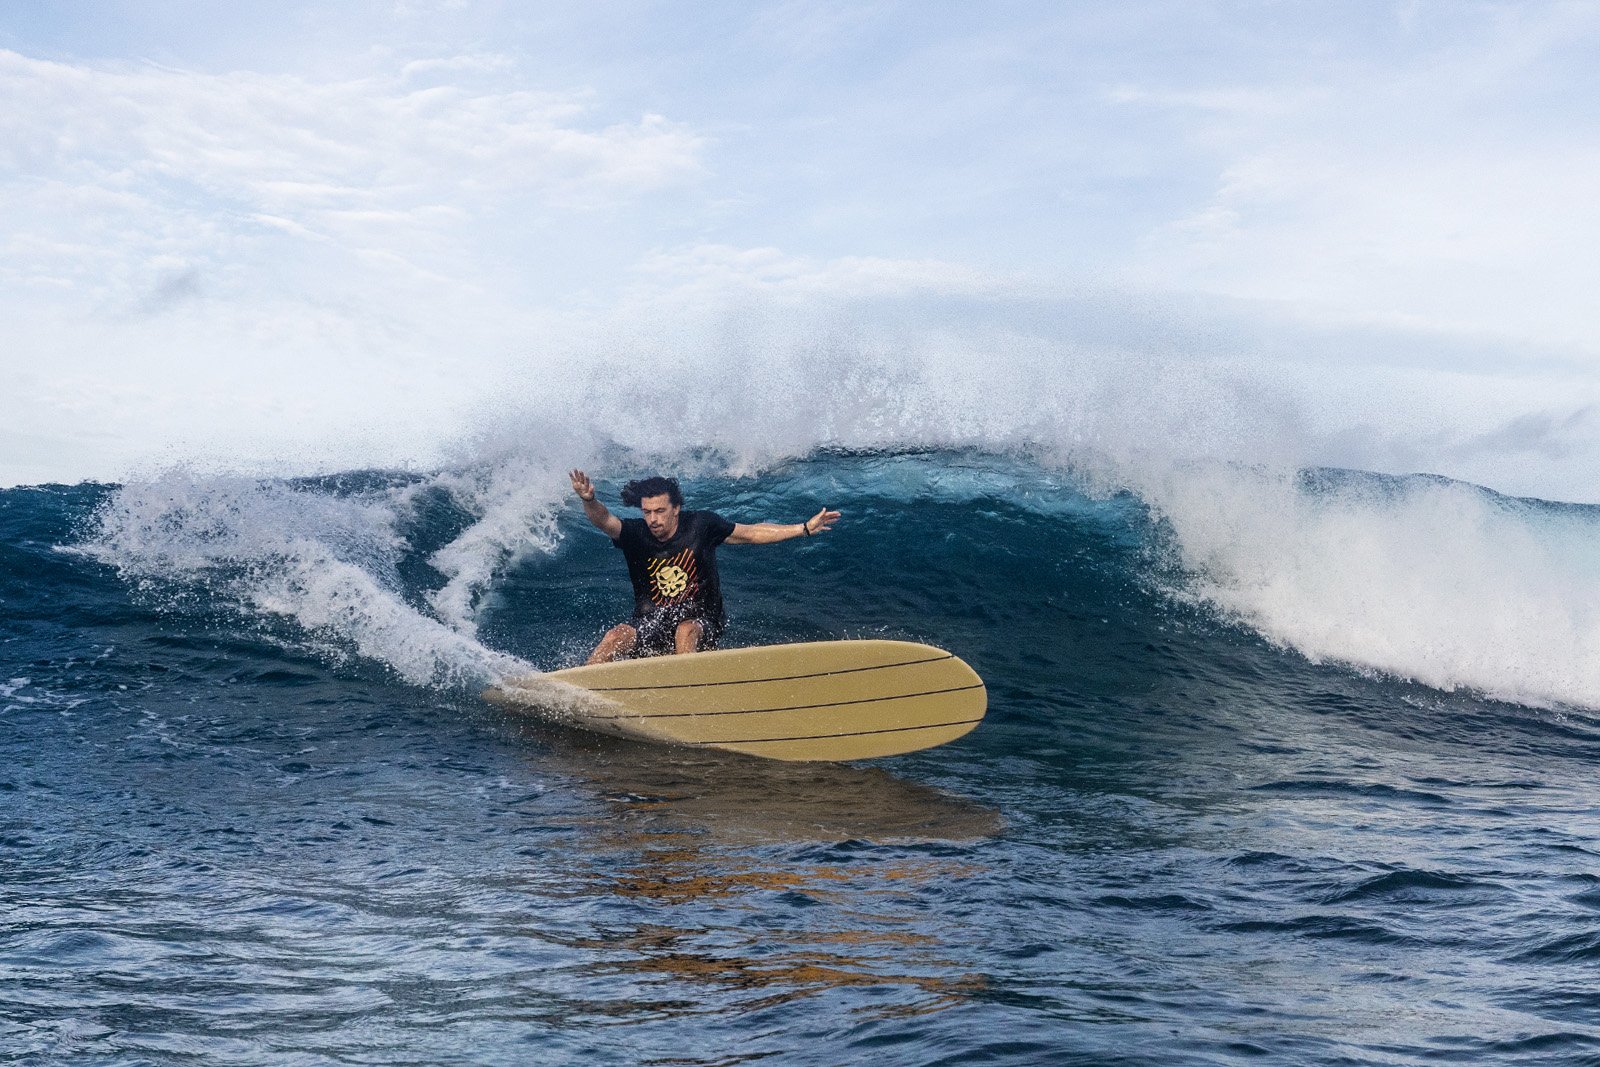 Surfer auf Delpero Longboard Classic bei radikalem Turn